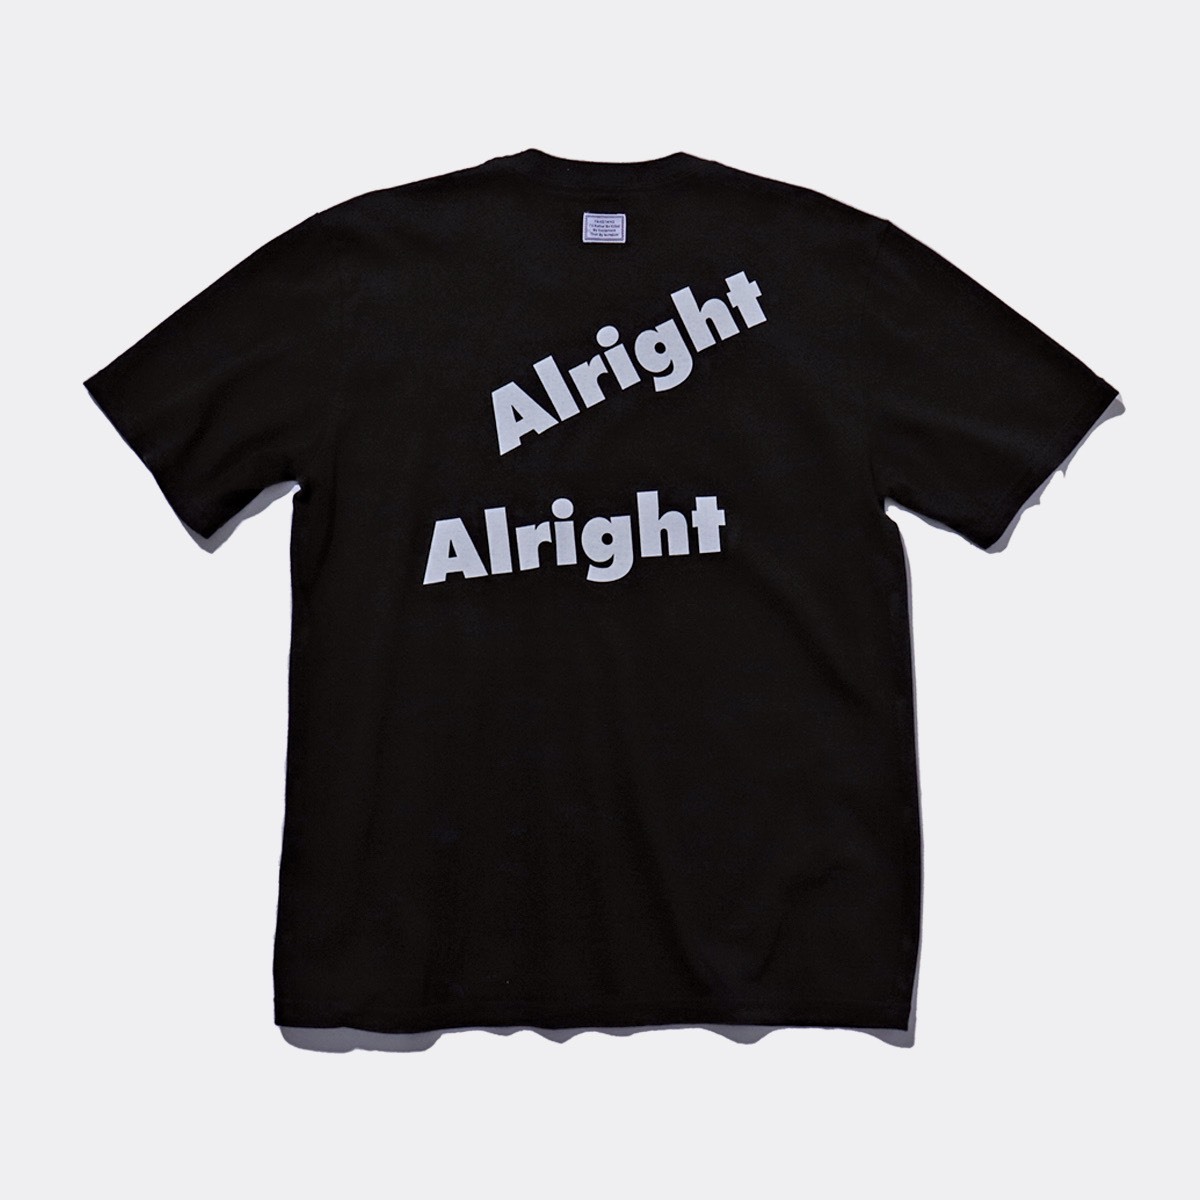 TANGTANG tilt alright /T-Shirts -black - 画像2枚目